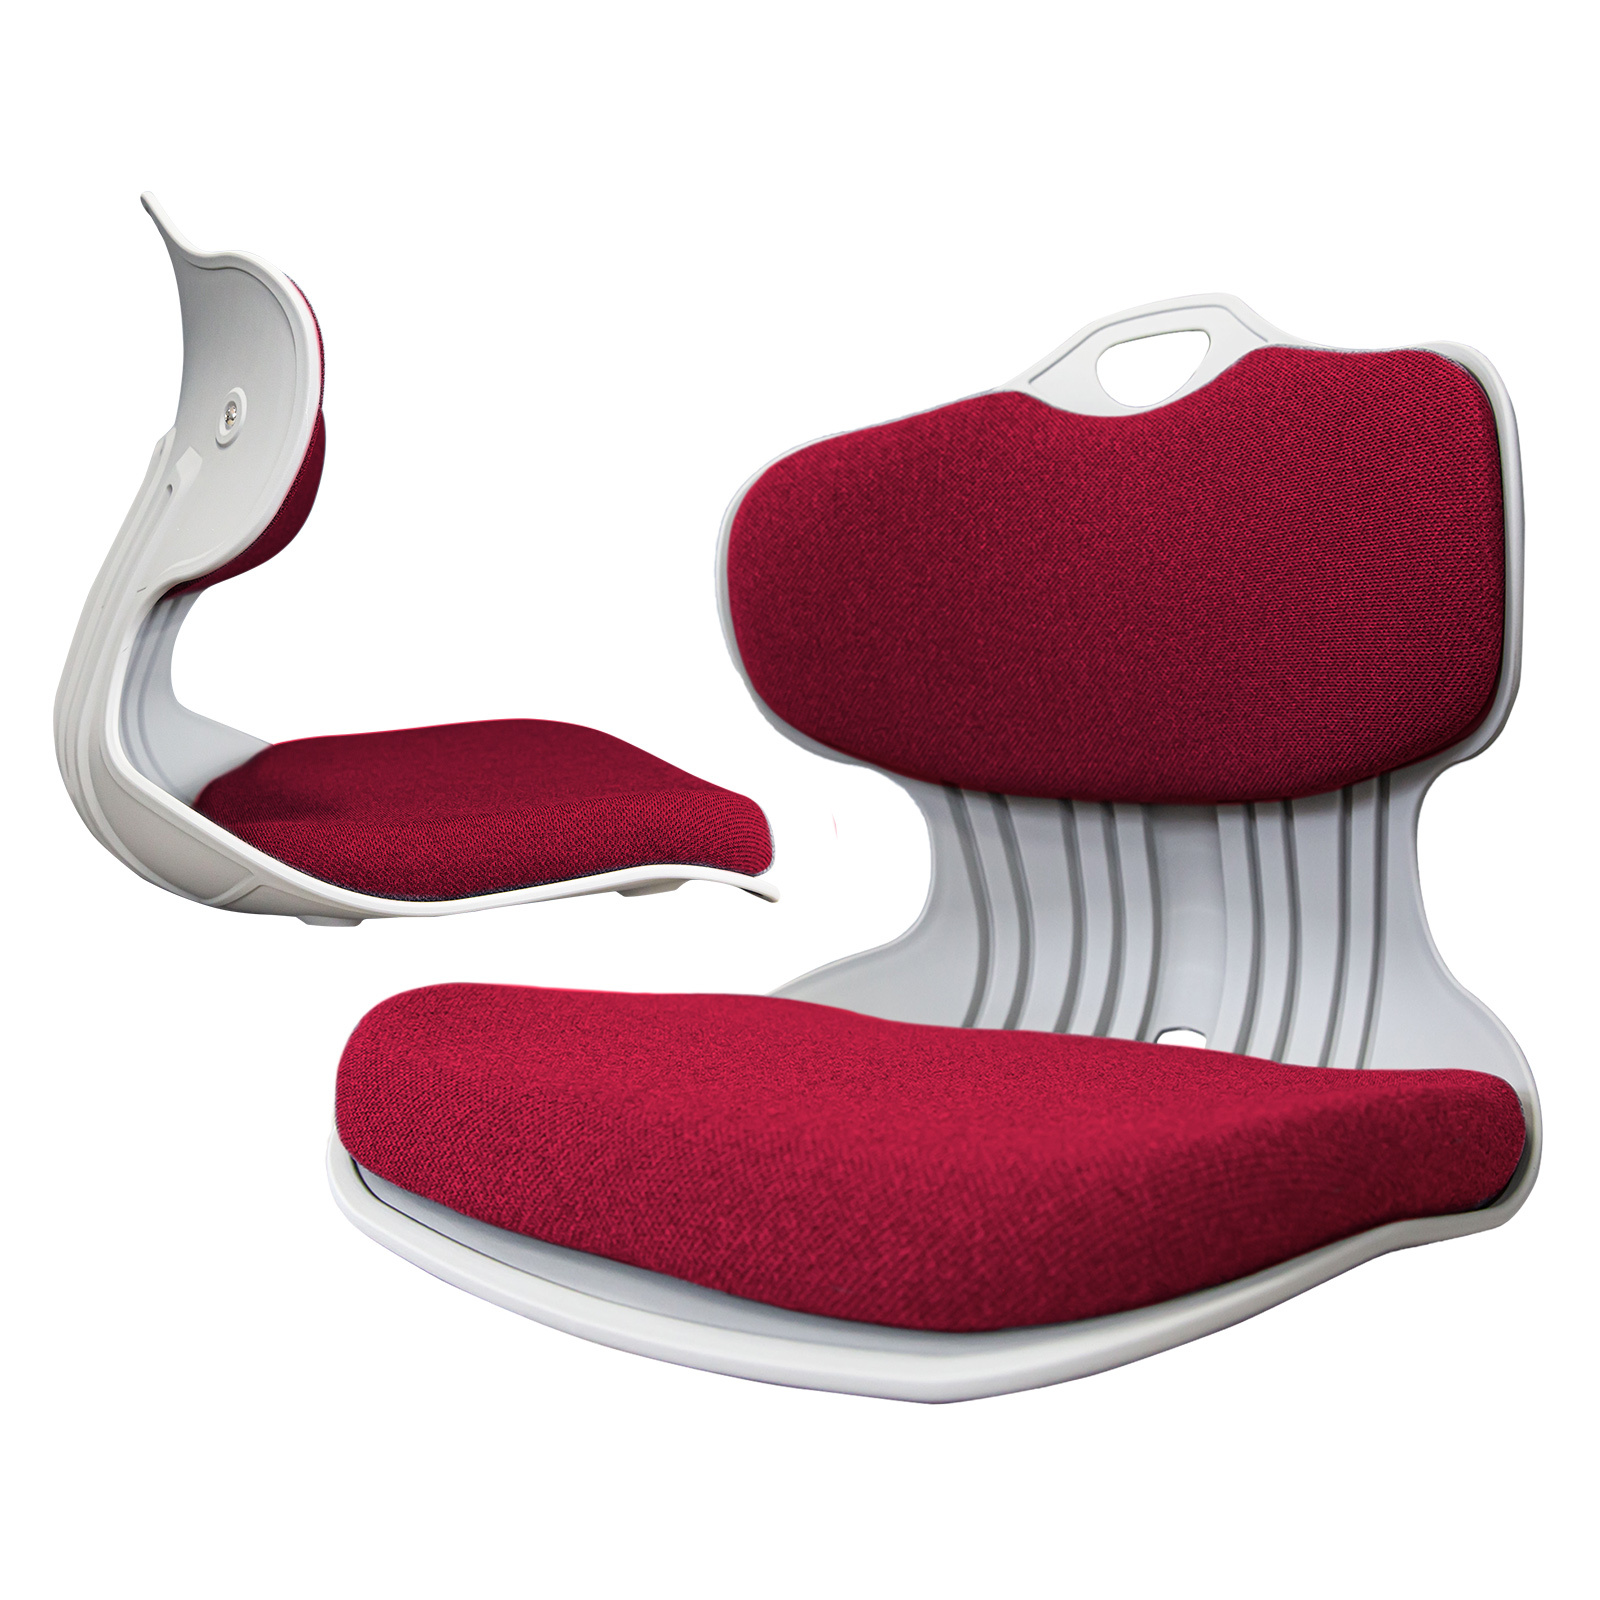 2X Korean Slender Posture Correction Chair - RED